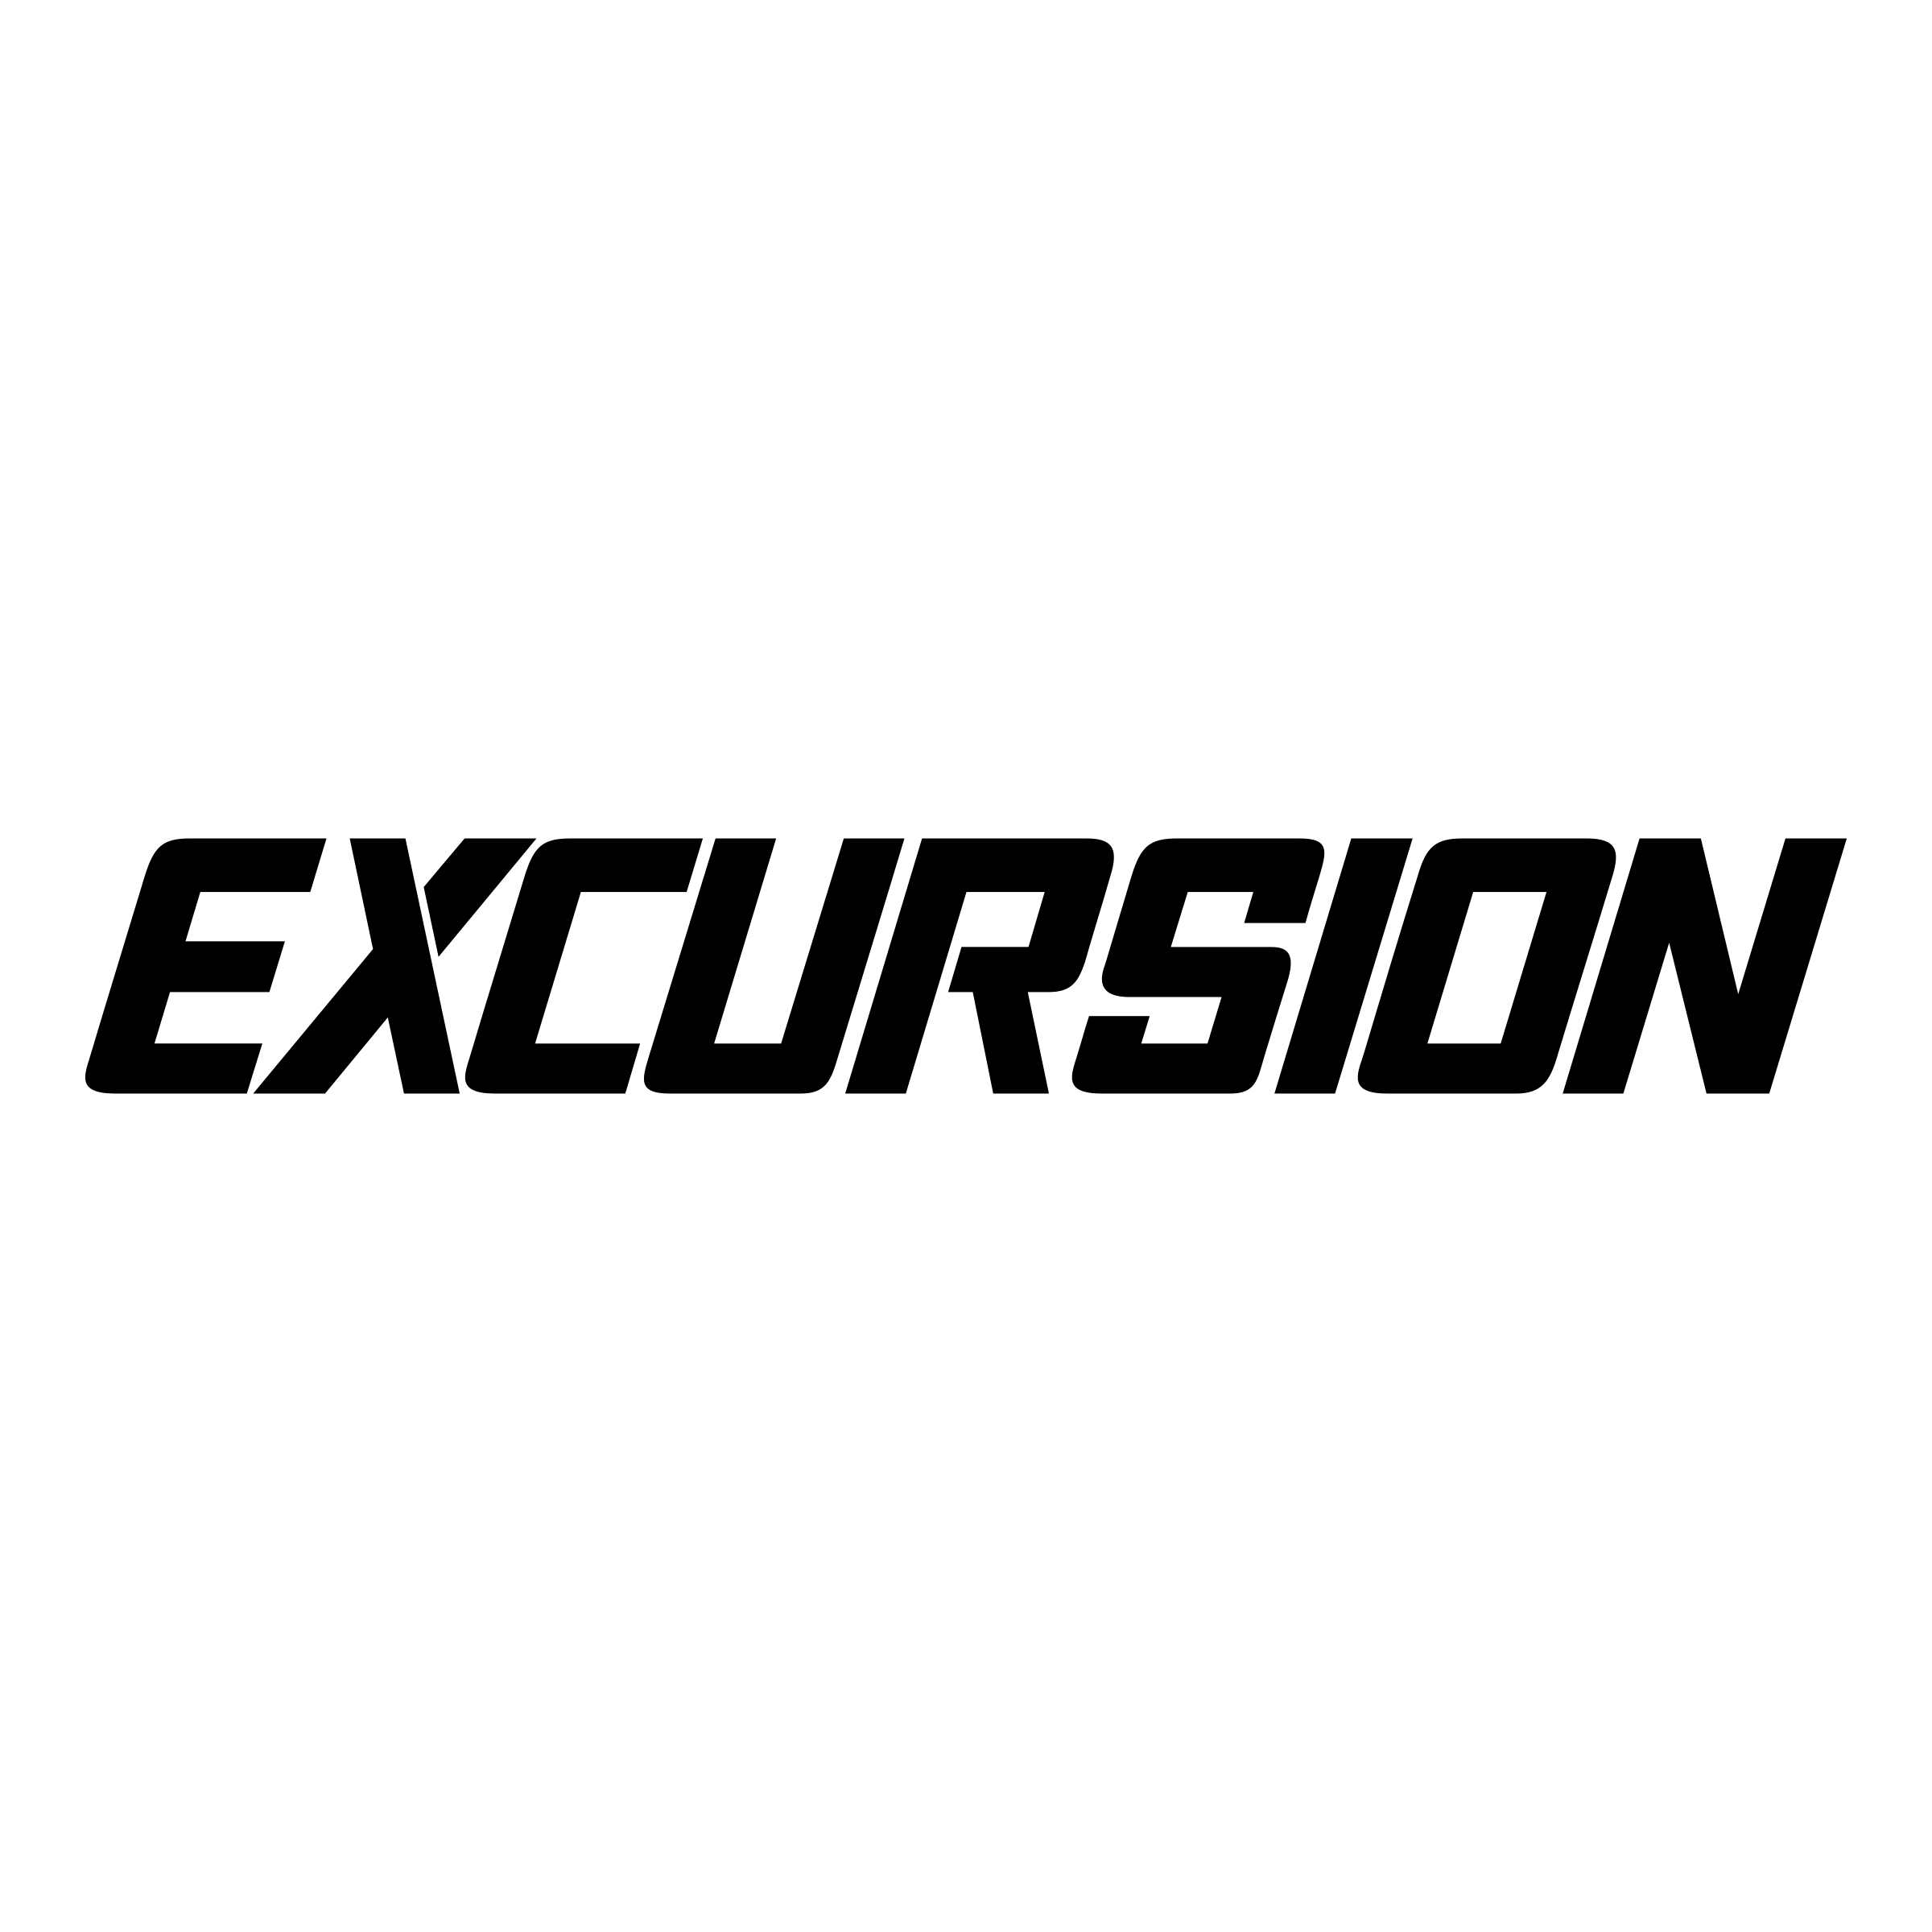 Excursion Logo - Excursion Logo PNG Transparent & SVG Vector - Freebie Supply